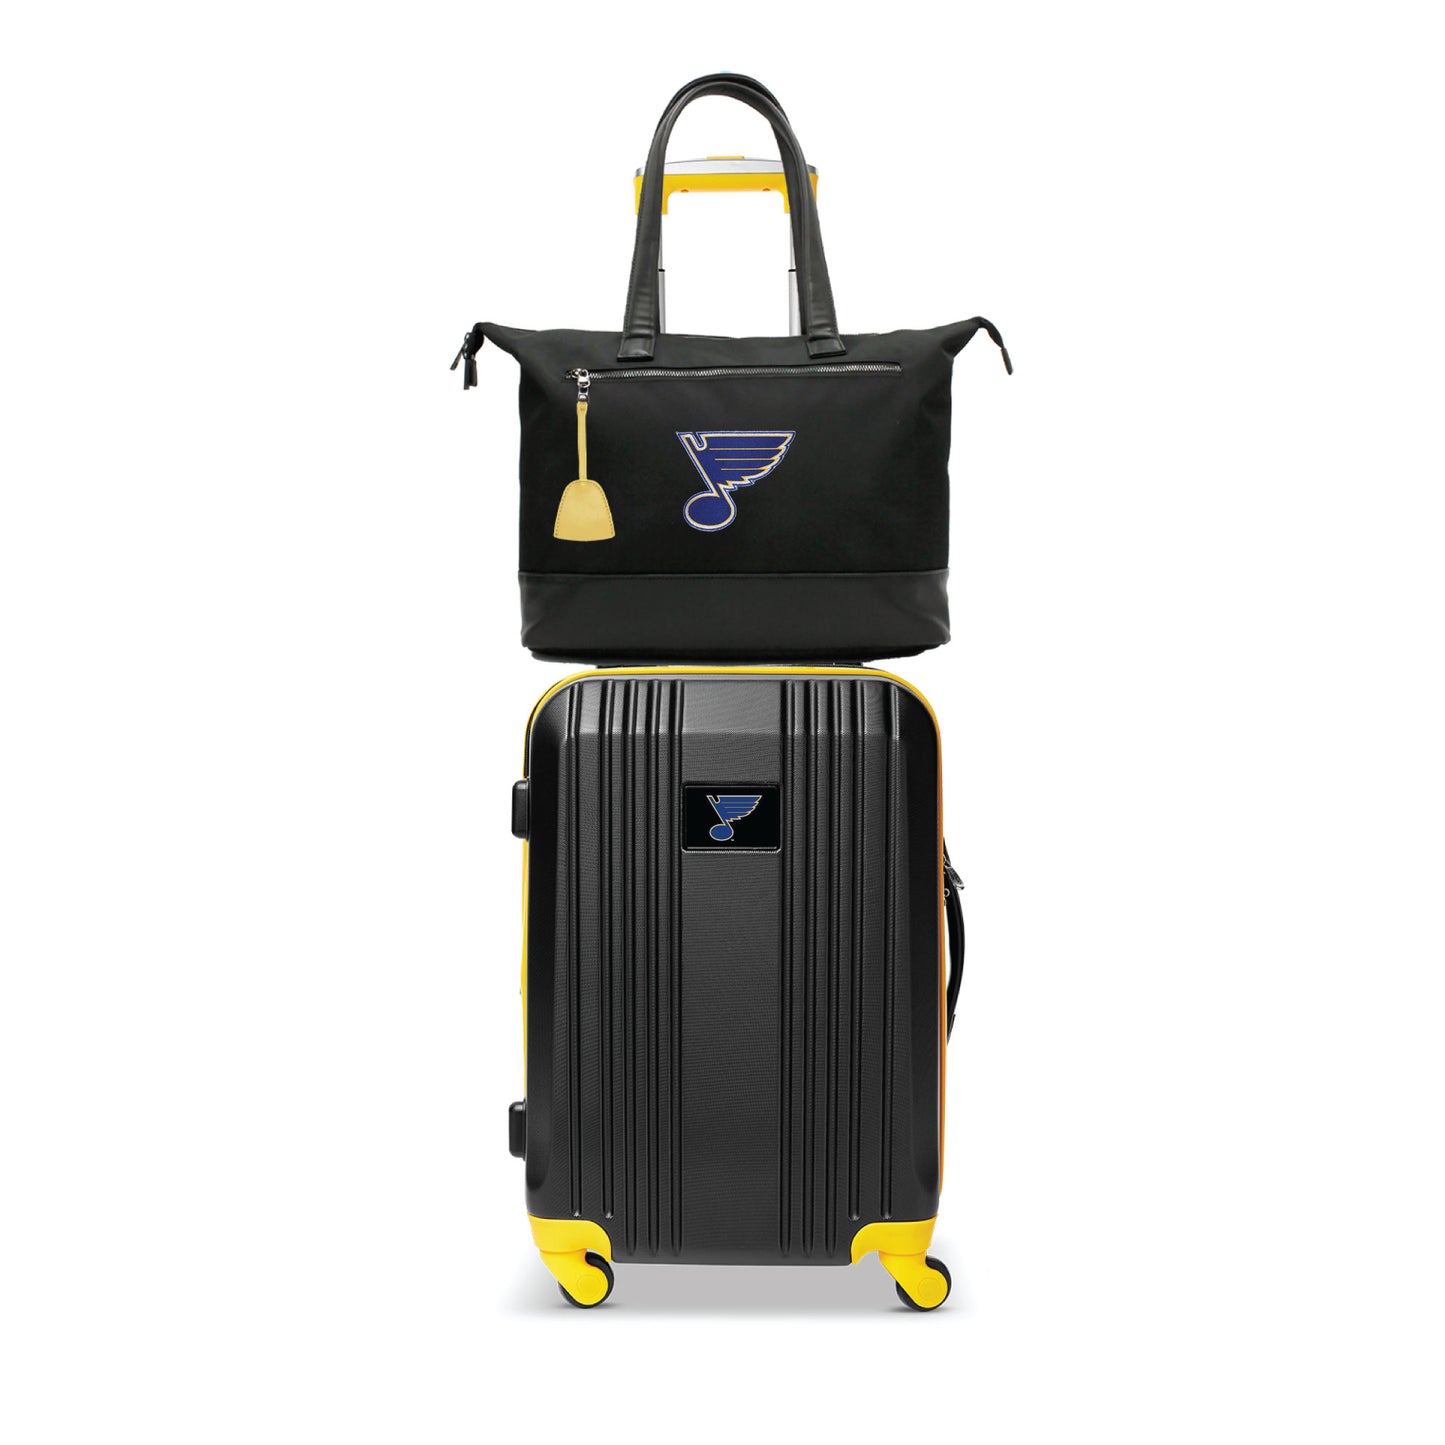 St Louis Blues Premium Laptop Tote Bag and Luggage Set